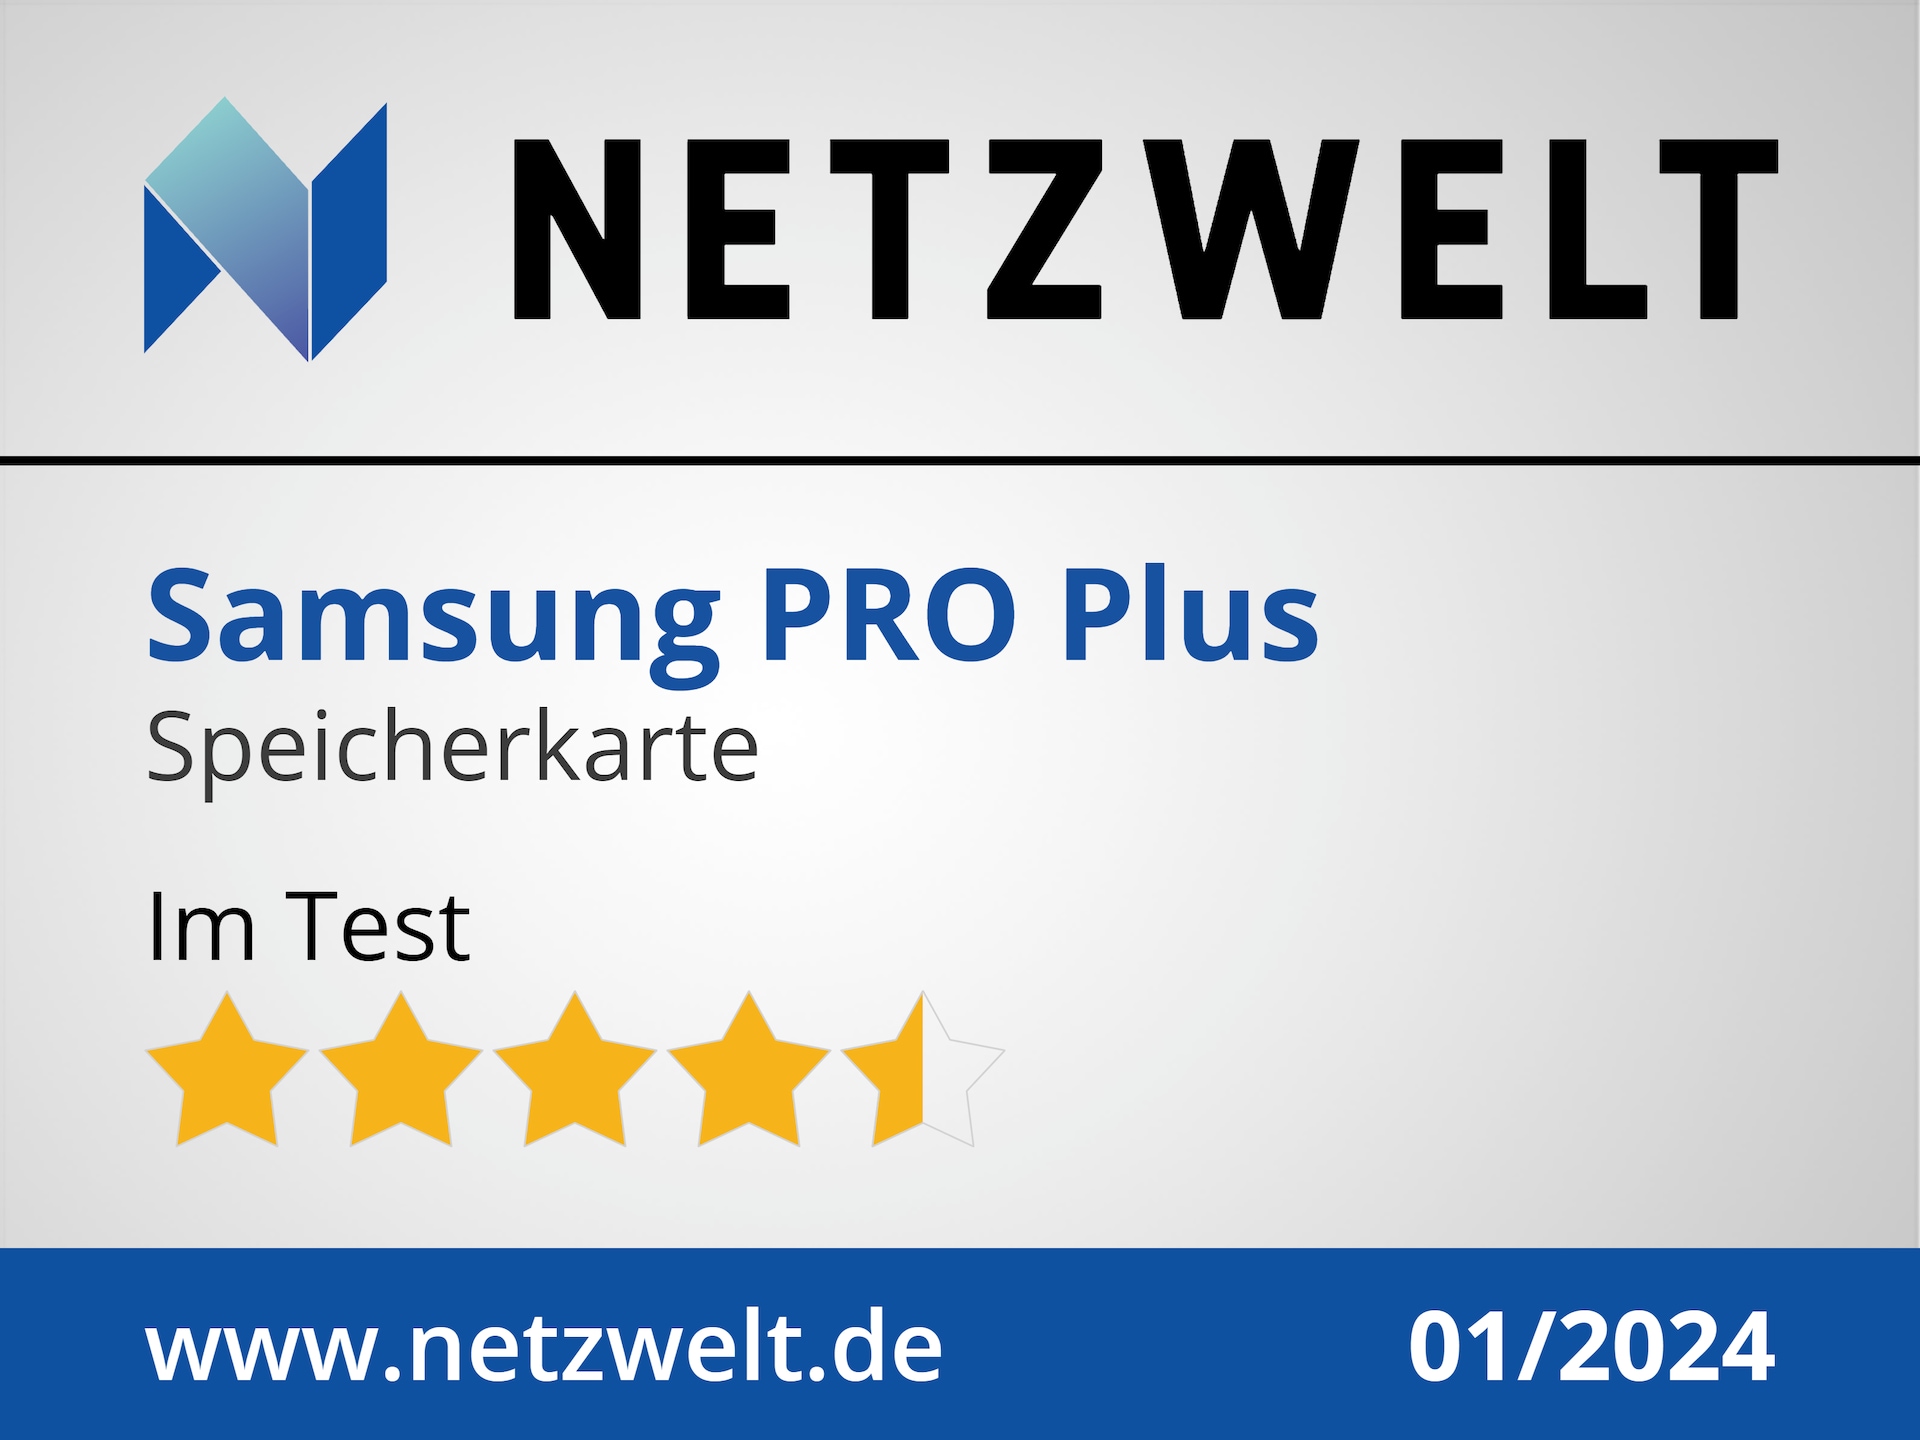 Netzwelt Pro Plus 256 GB. Period: unlimited